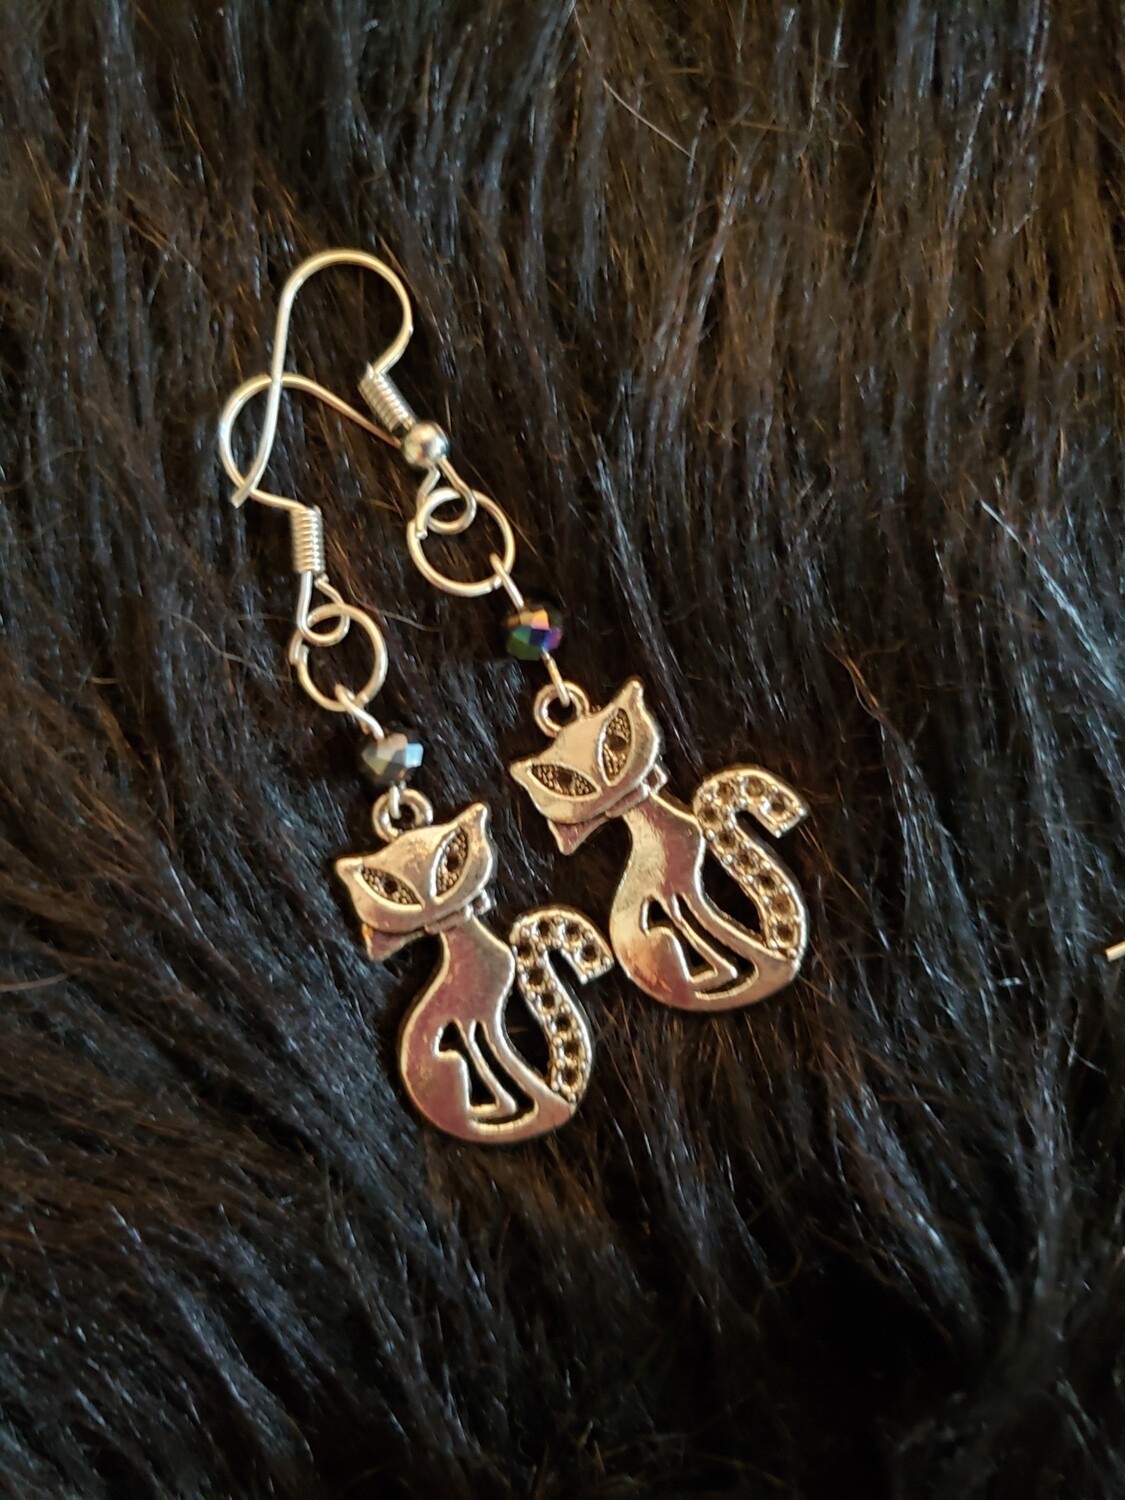 Charmed earrings